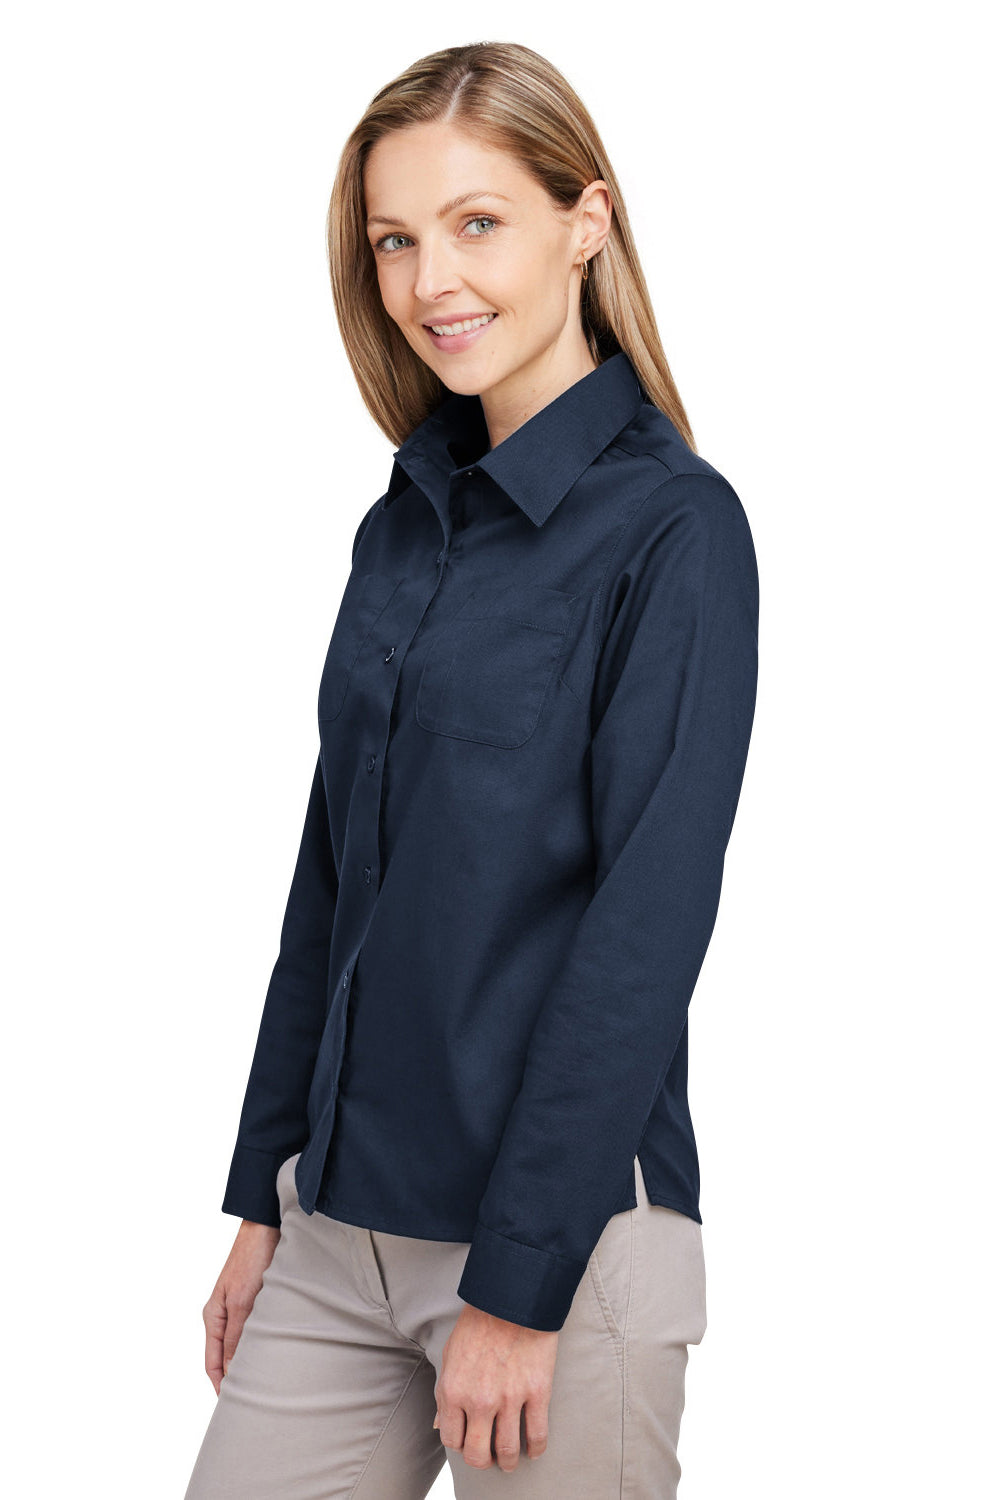 Harriton M585LW Womens Advantage Long Sleeve Button Down Shirt w/ Double Pockets Dark Navy Blue 3Q